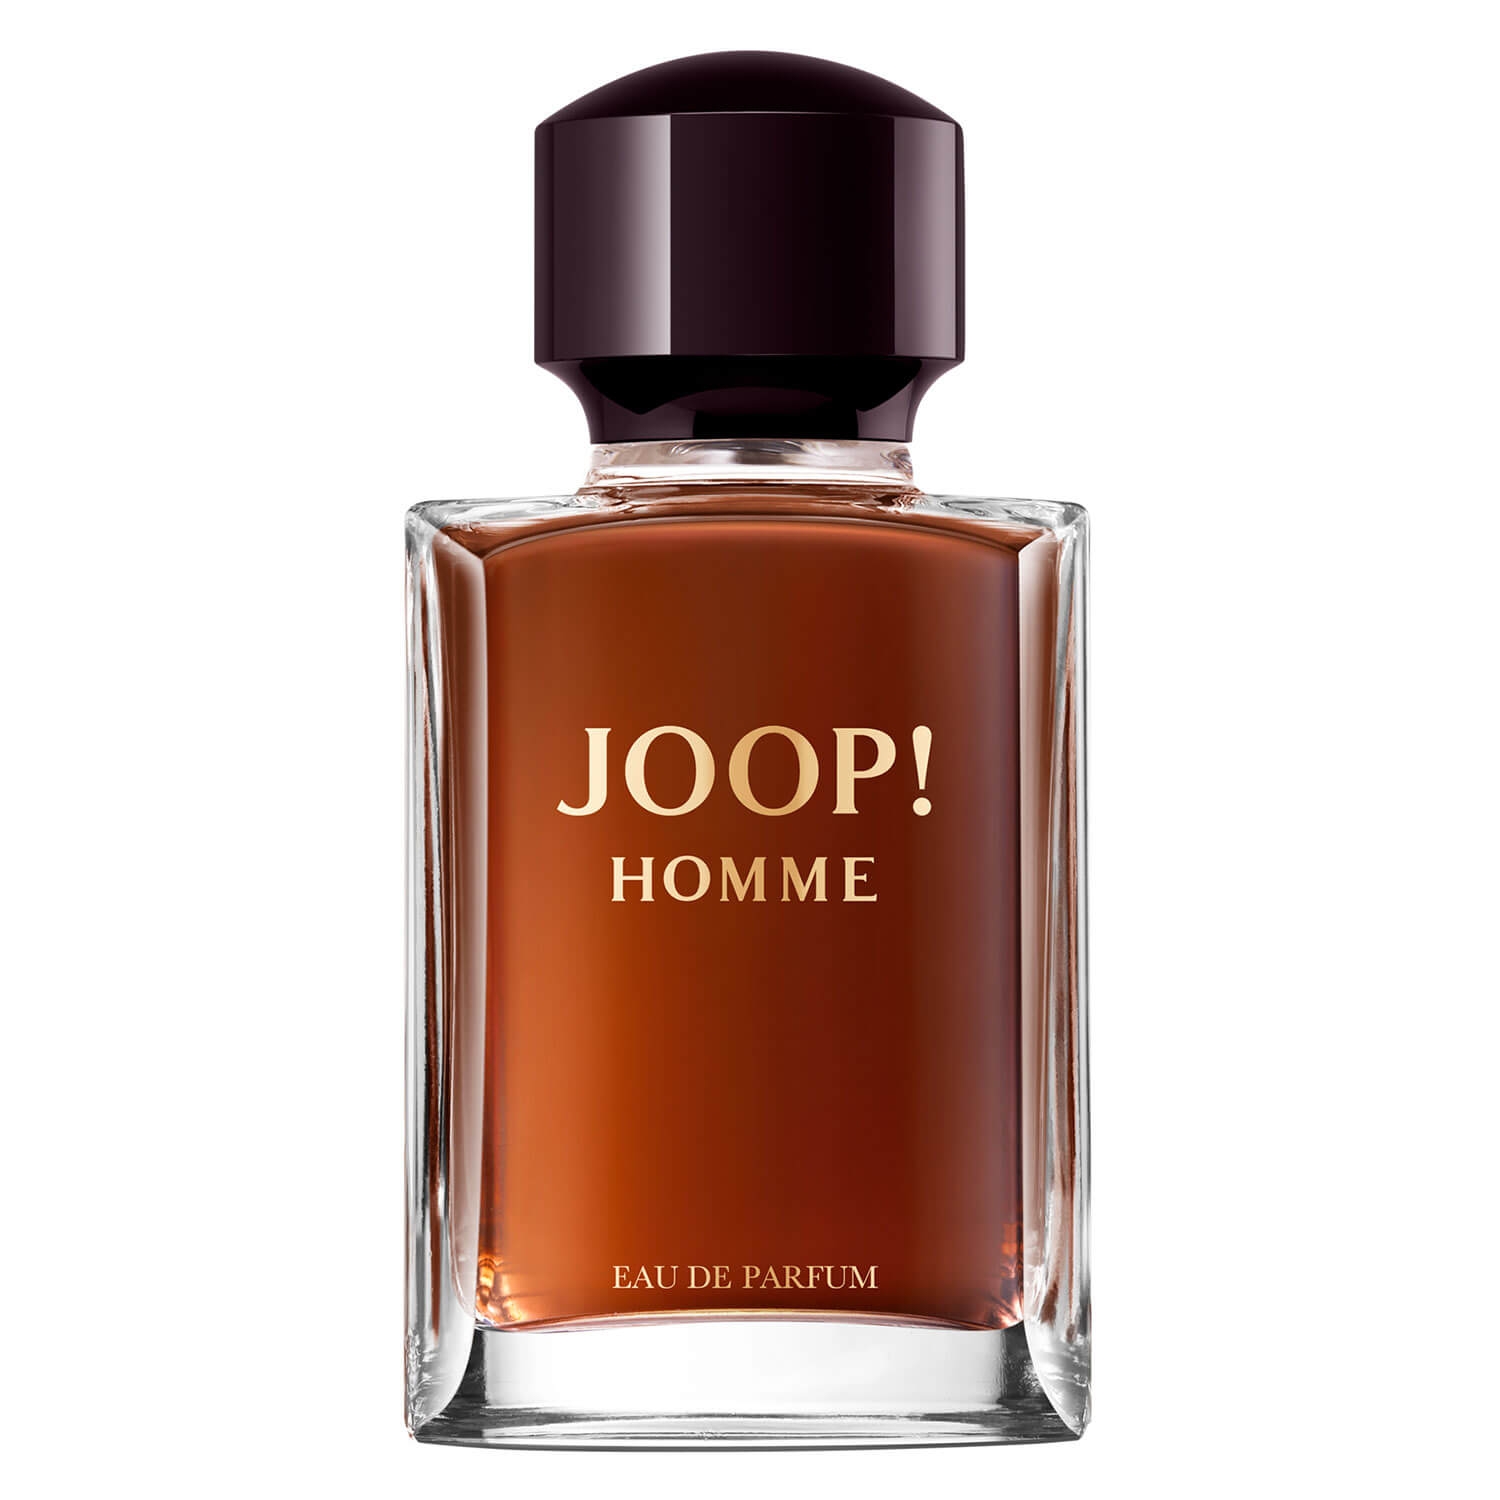 Produktbild von Joop! Homme - Eau de Parfum